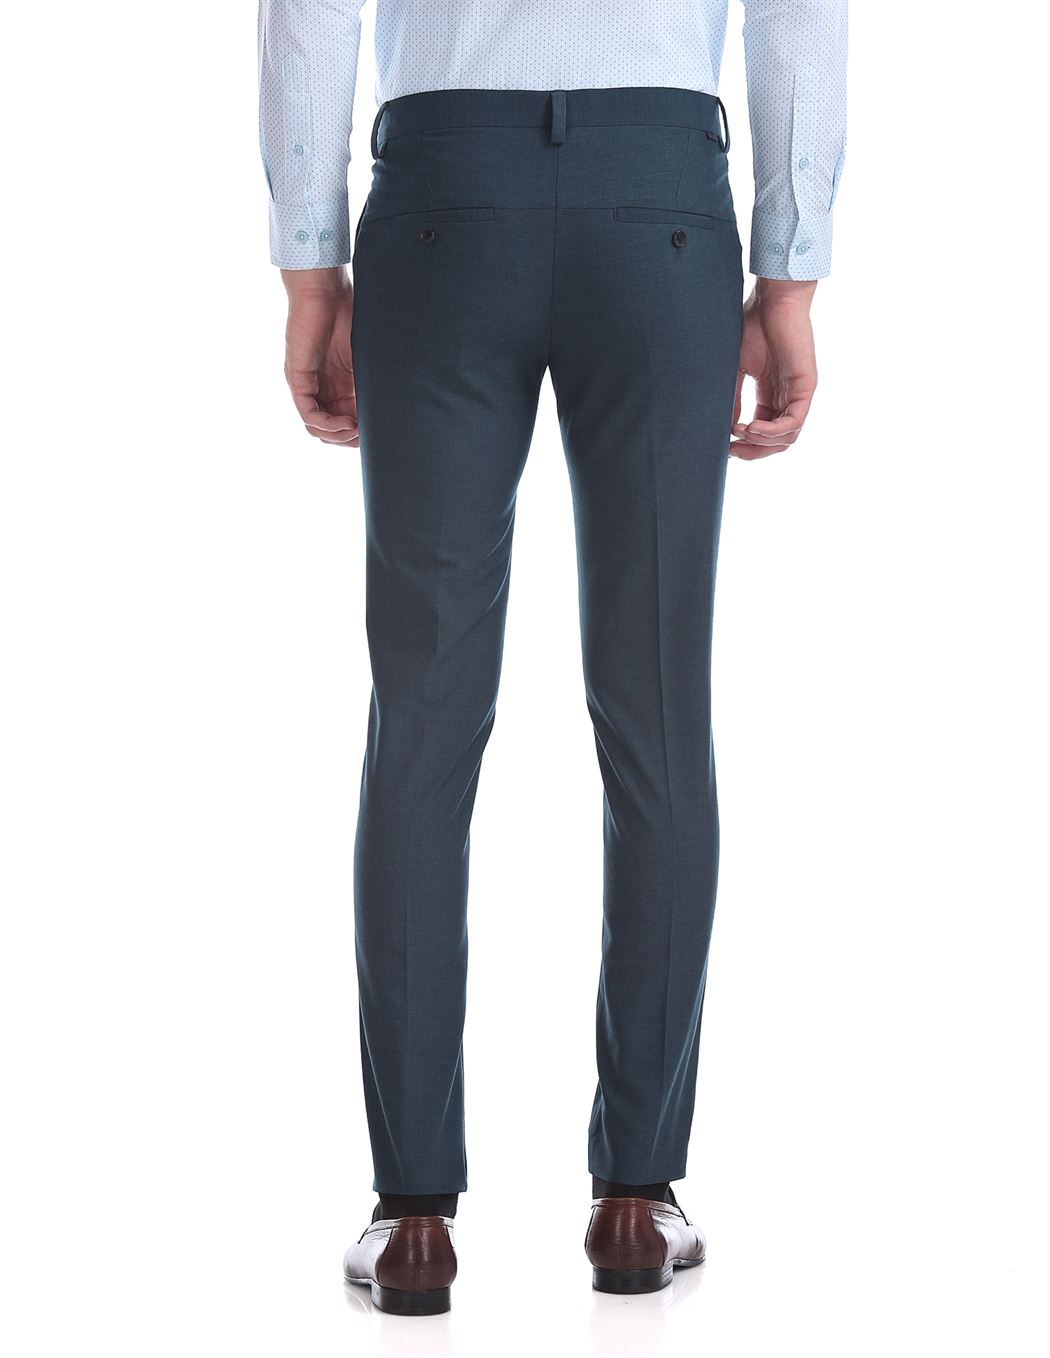 Buy Uspa Formal Slim Fit Solid Trousers by Arvind Lifestyle Brands online   Looksgudin